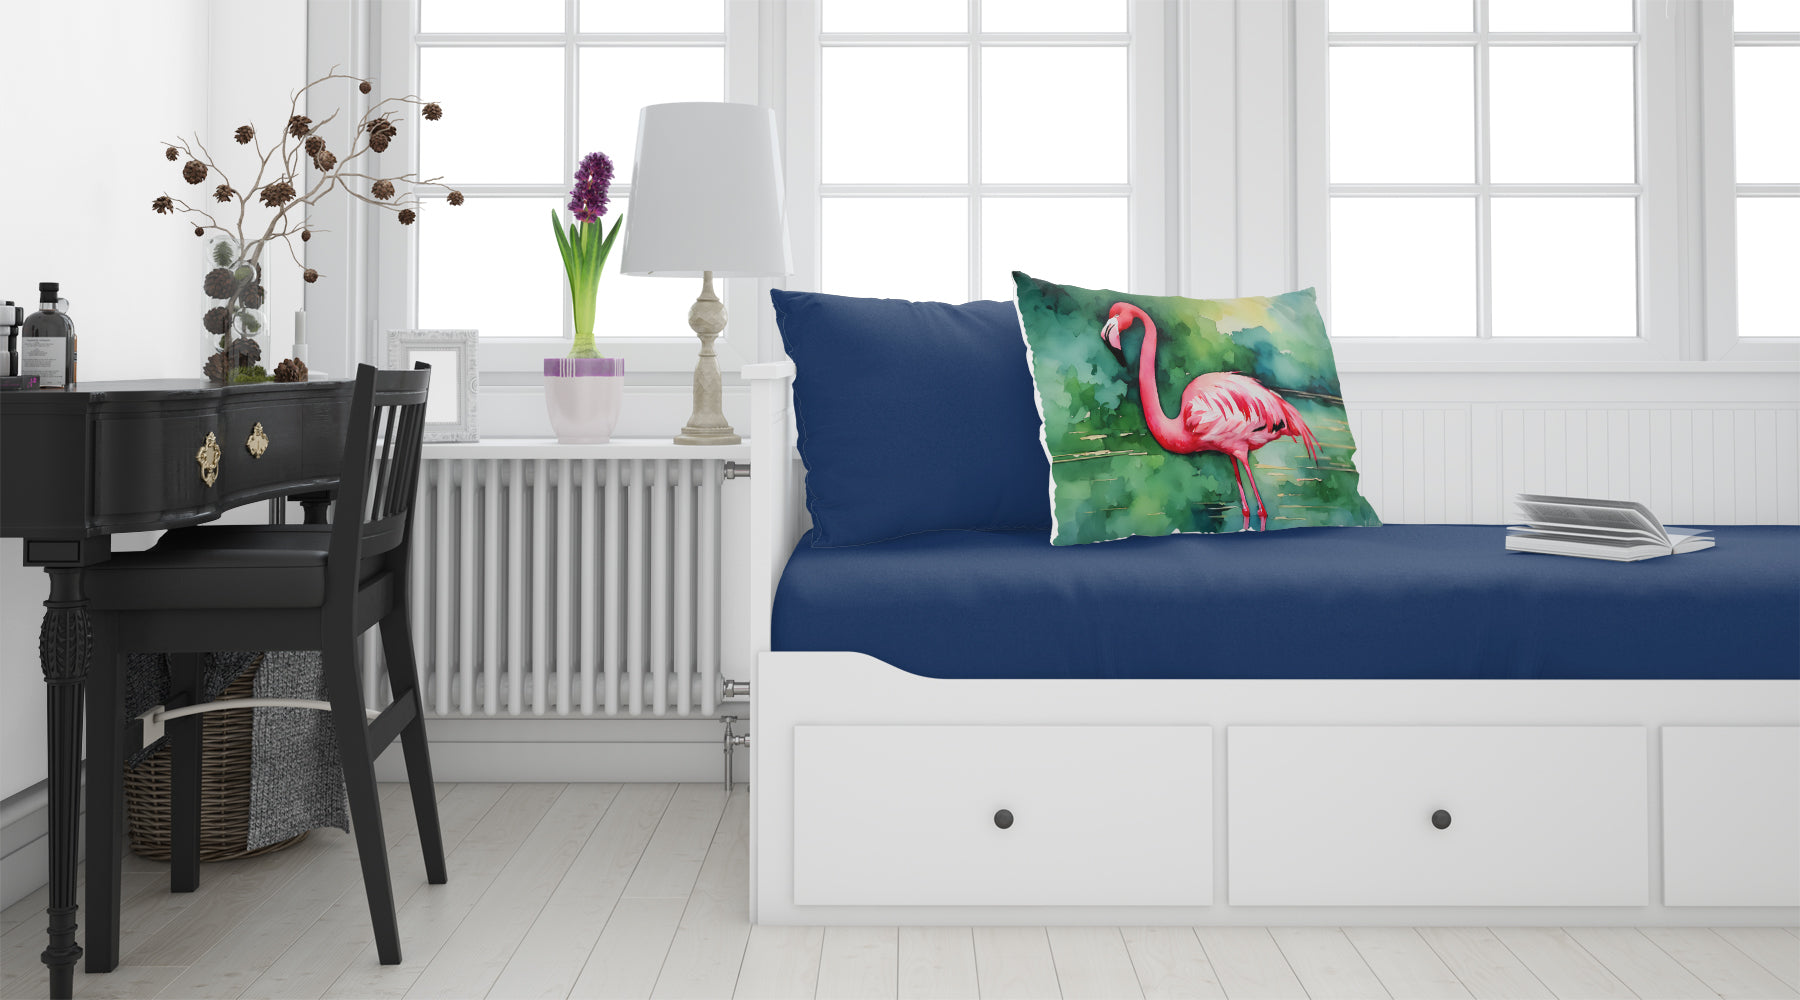 Buy this Flamingo Standard Pillowcase